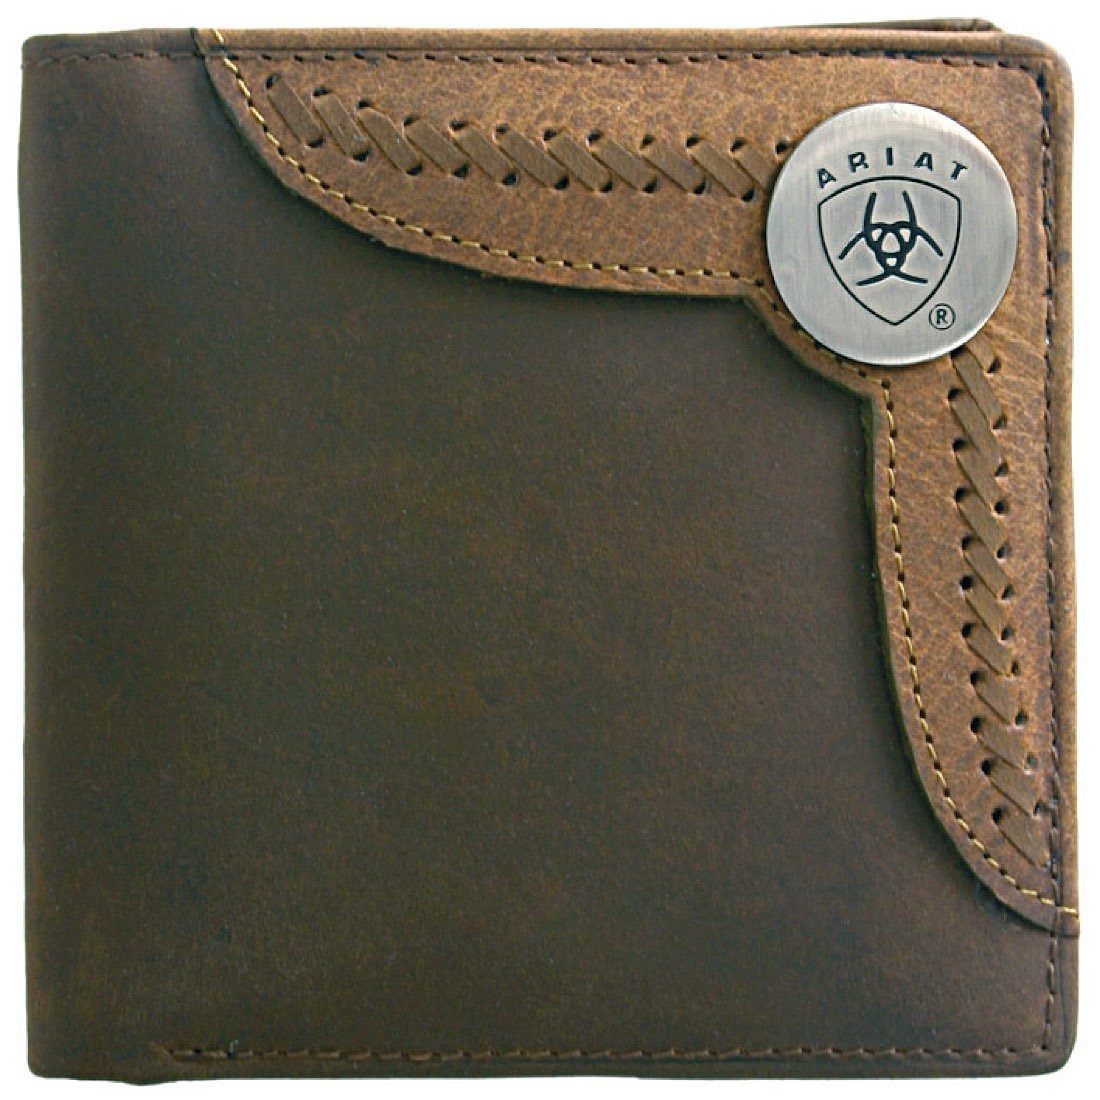 Ariat Bi-Fold Wallet Distressed Brown - WLT2103A